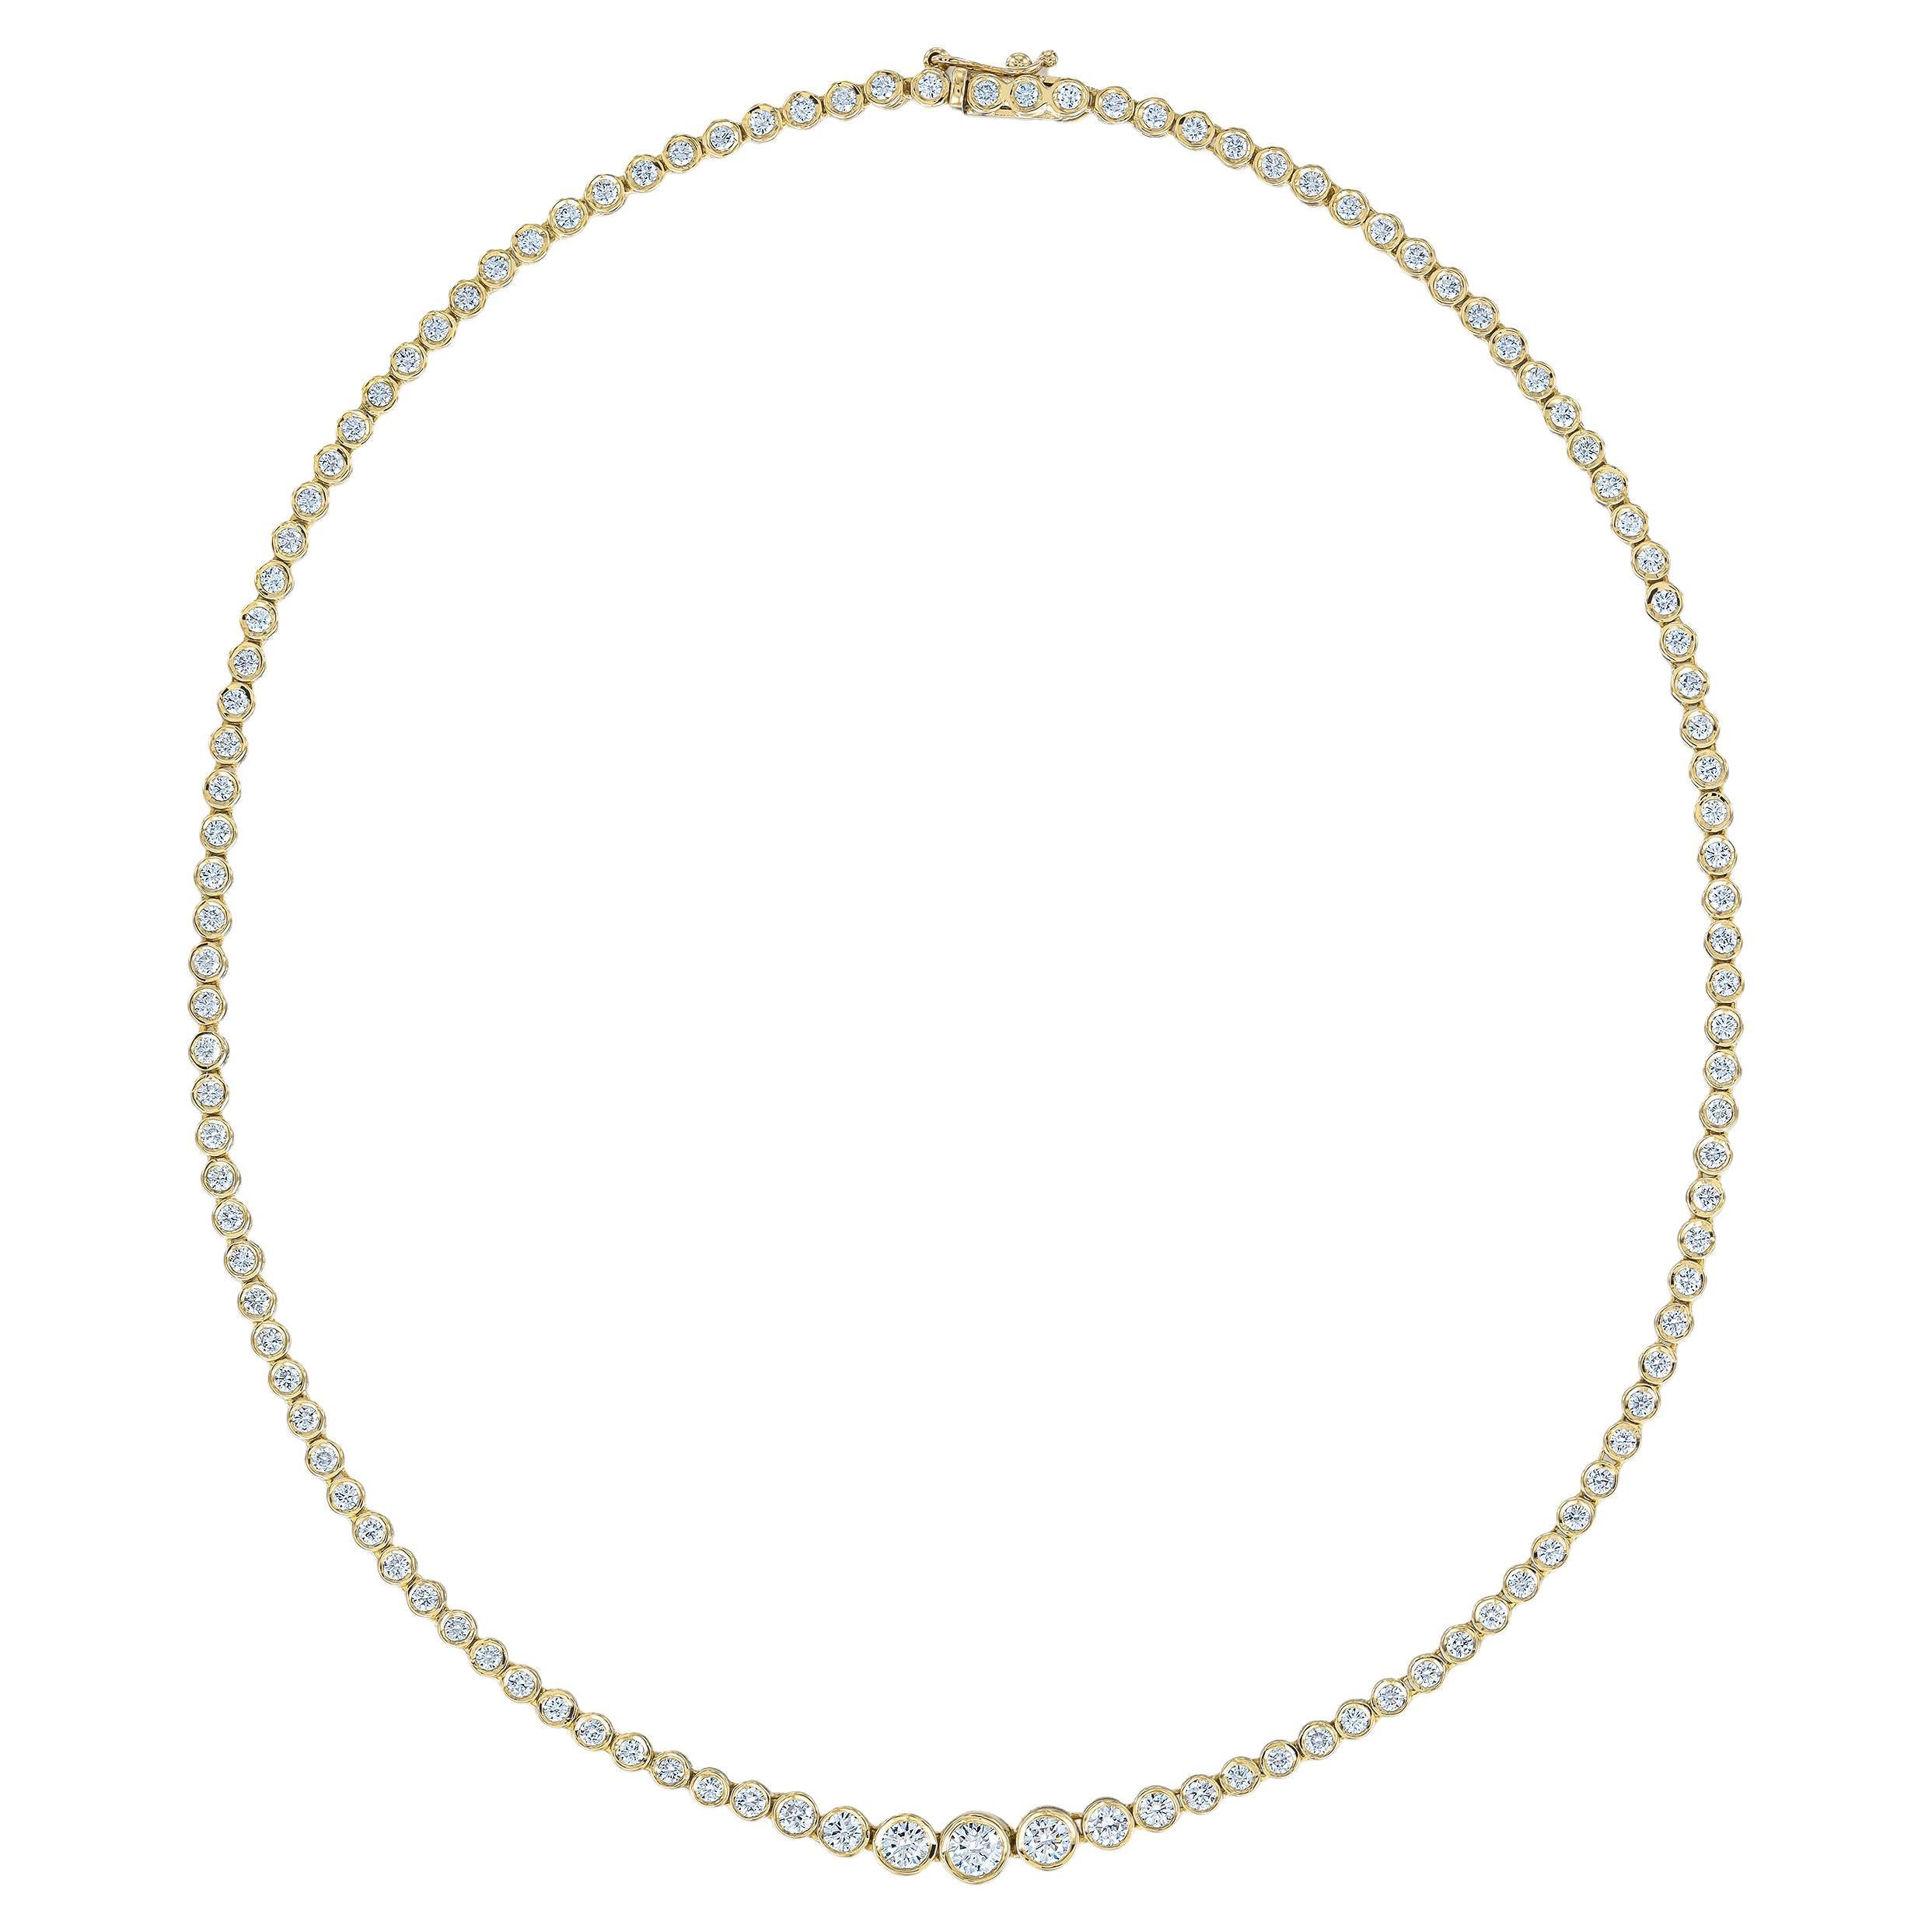 6.50 Carat Diamond Tennis Necklace in 18 Karat Yellow Gold Bezel Setting